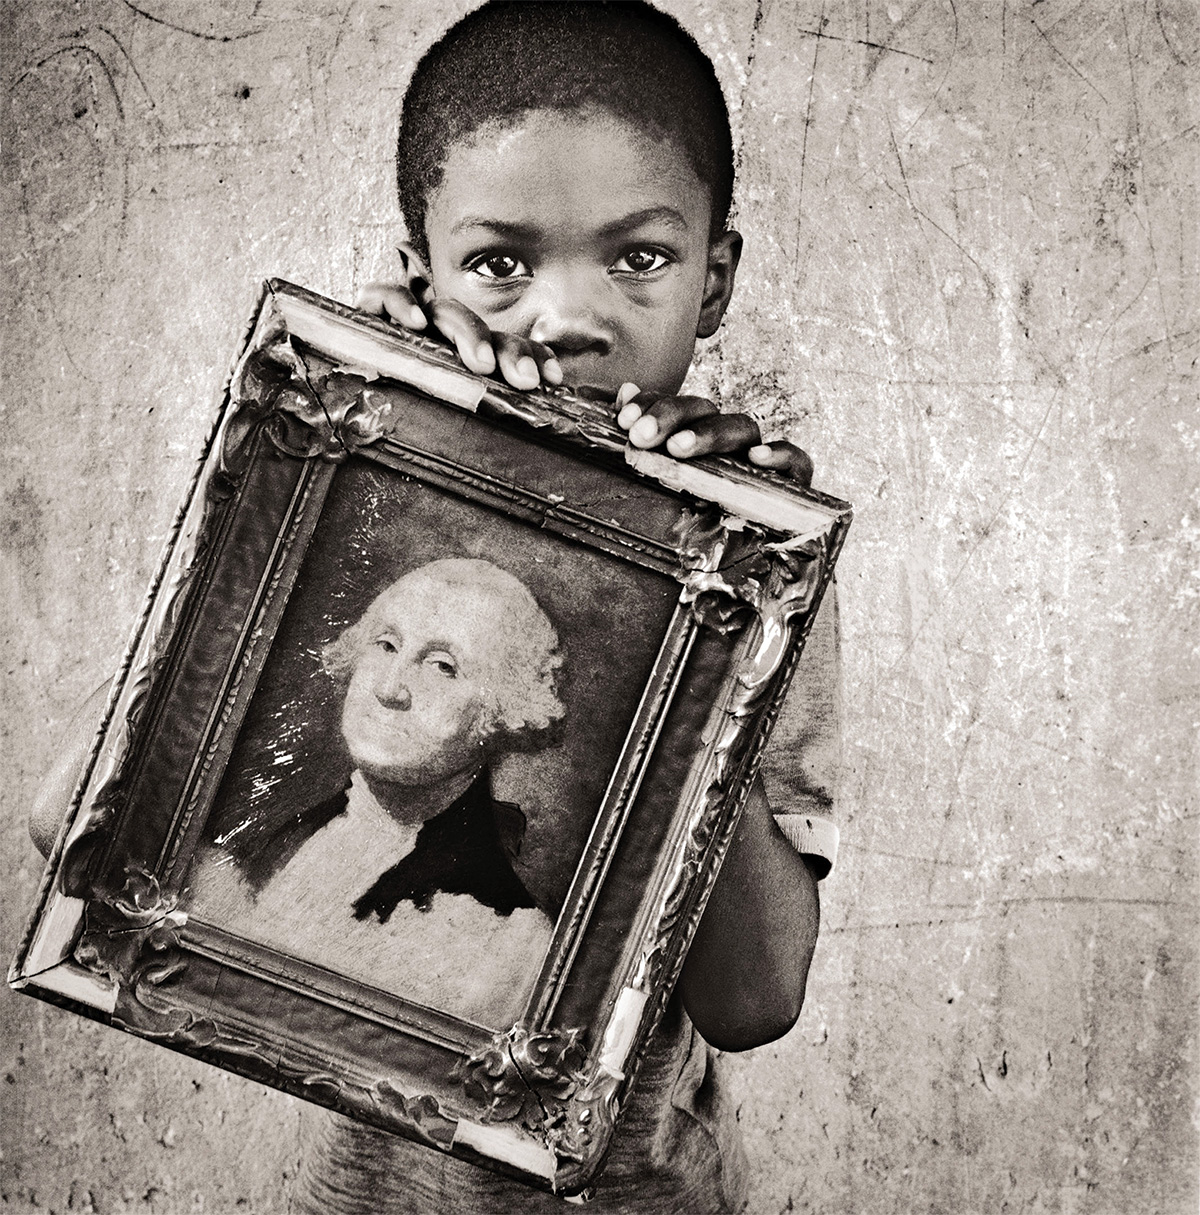 Boy holds a framed portrait of president George Washington